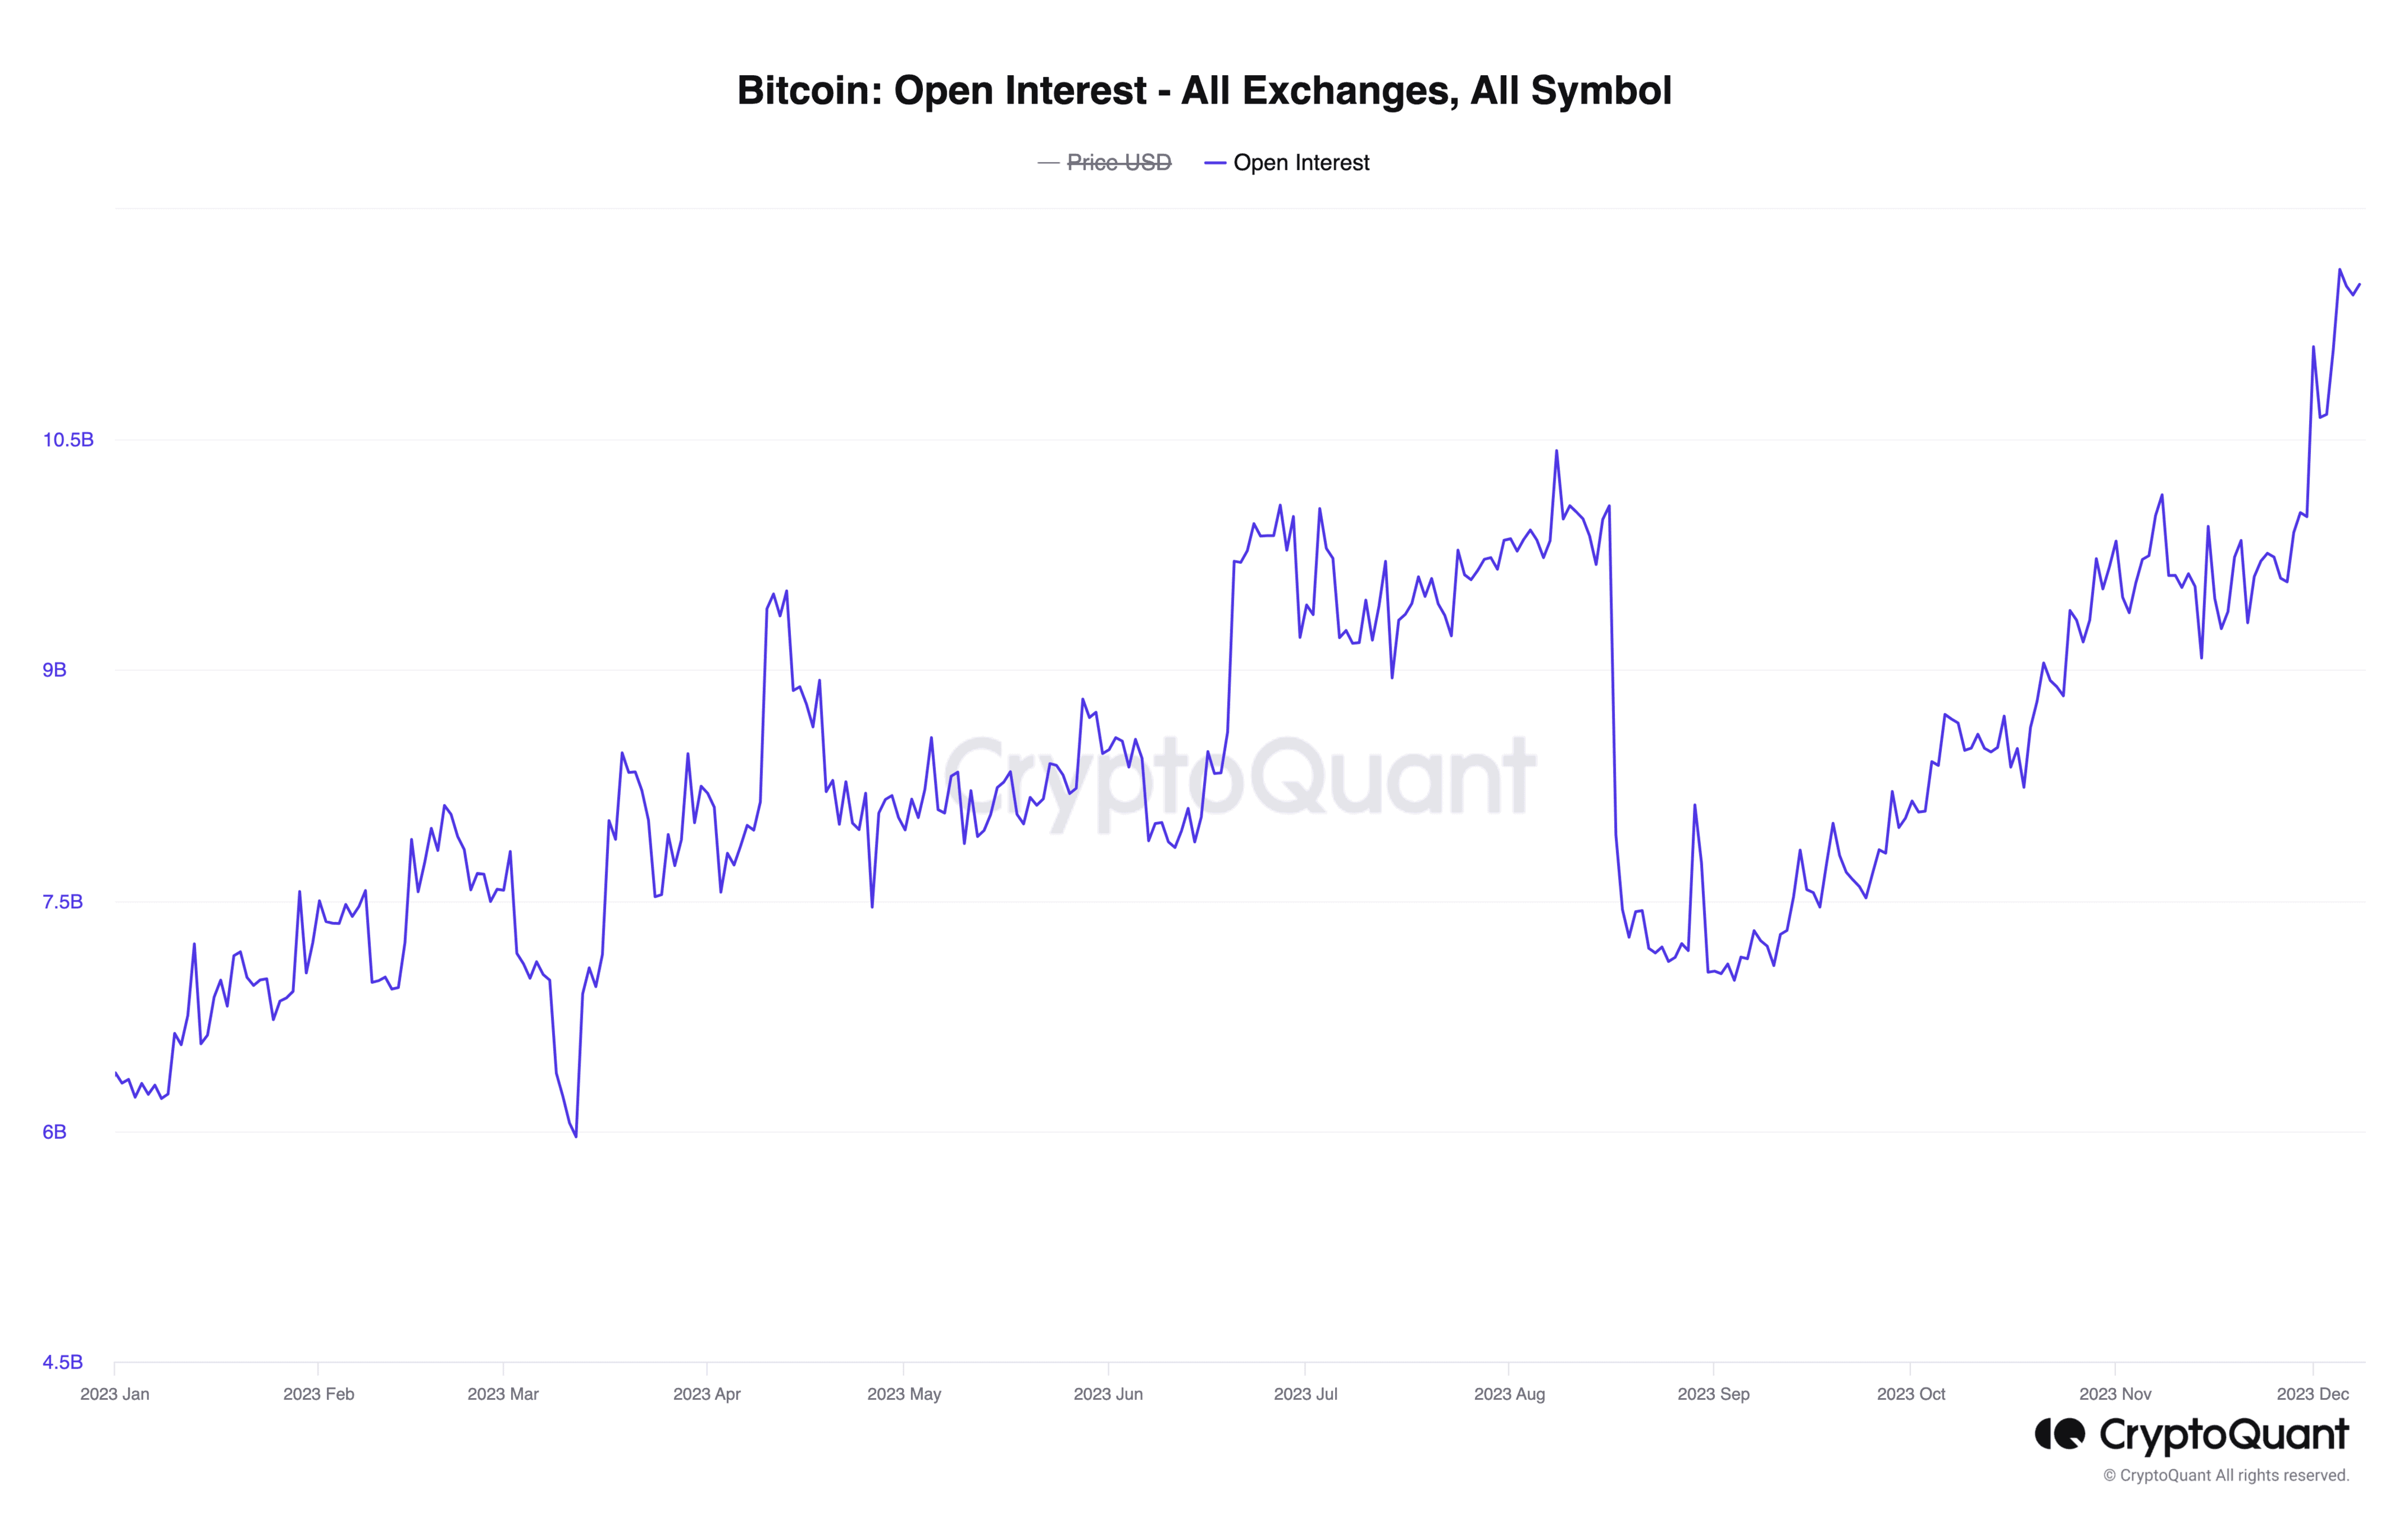 Bitcoin open interest since the beginning of 2023